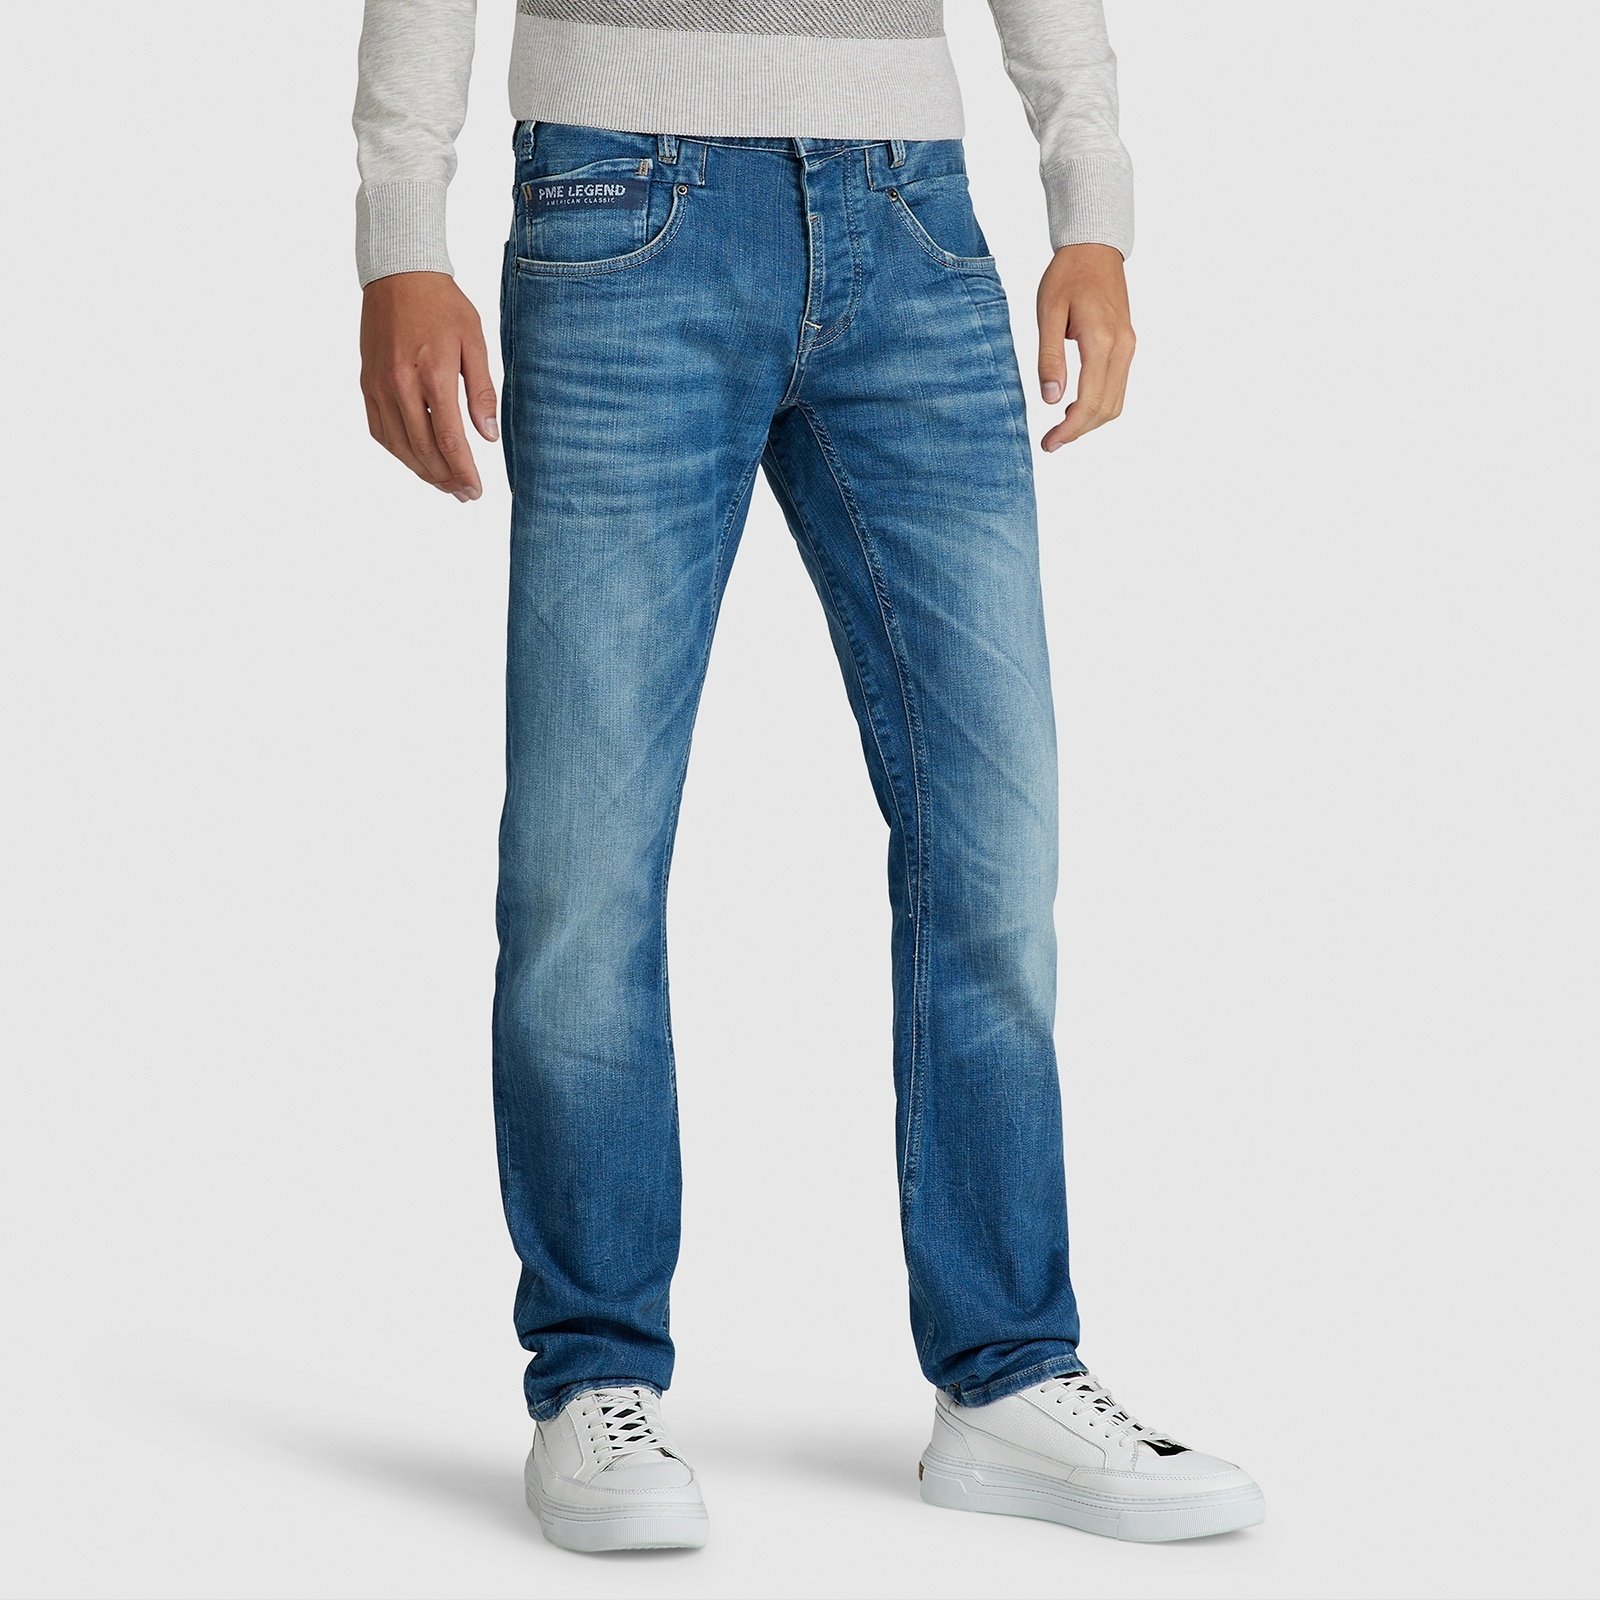 Gratis verzending! - PME Legend Fit Commander 2 Jeans PTR985- - Greenfield Fashion